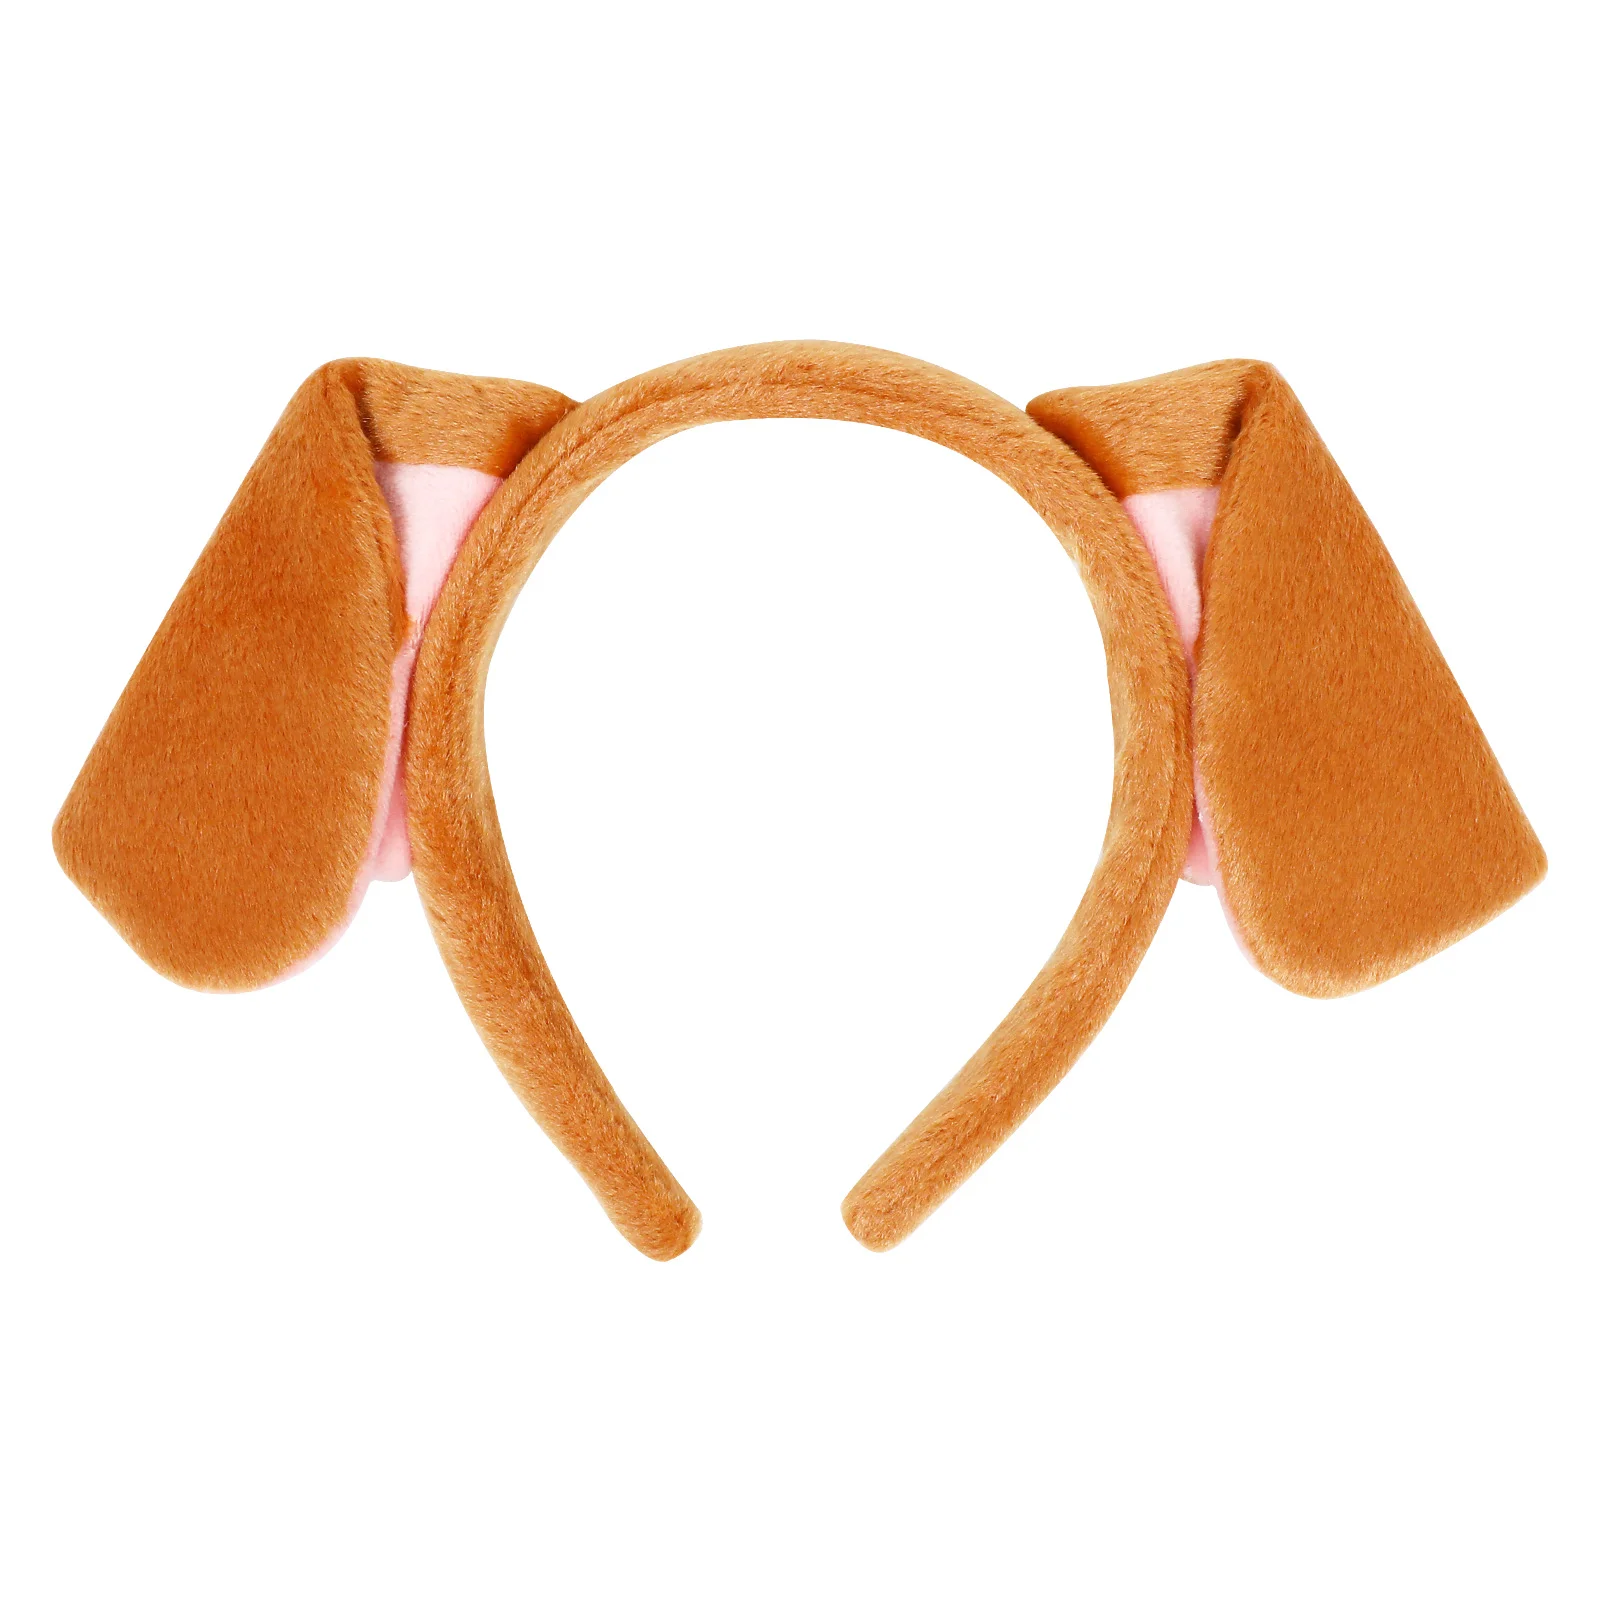 1pc Puppy Ears Headband Animal Headband Party Cosplay Headband Dog Ears Costume Hair Accessories